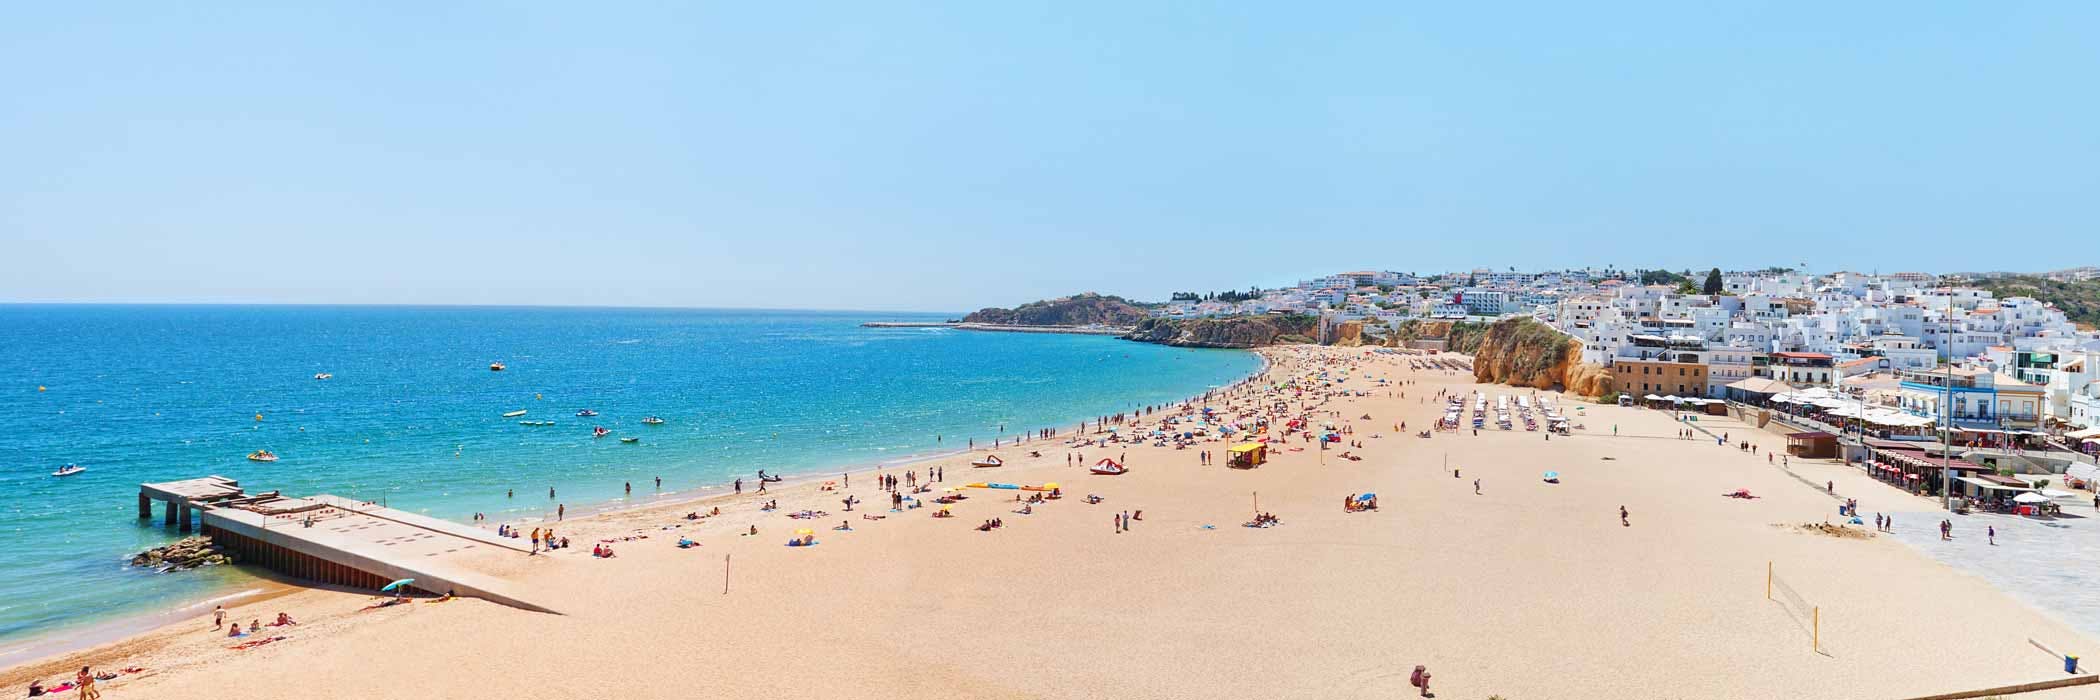 Algarve Holidays under £500